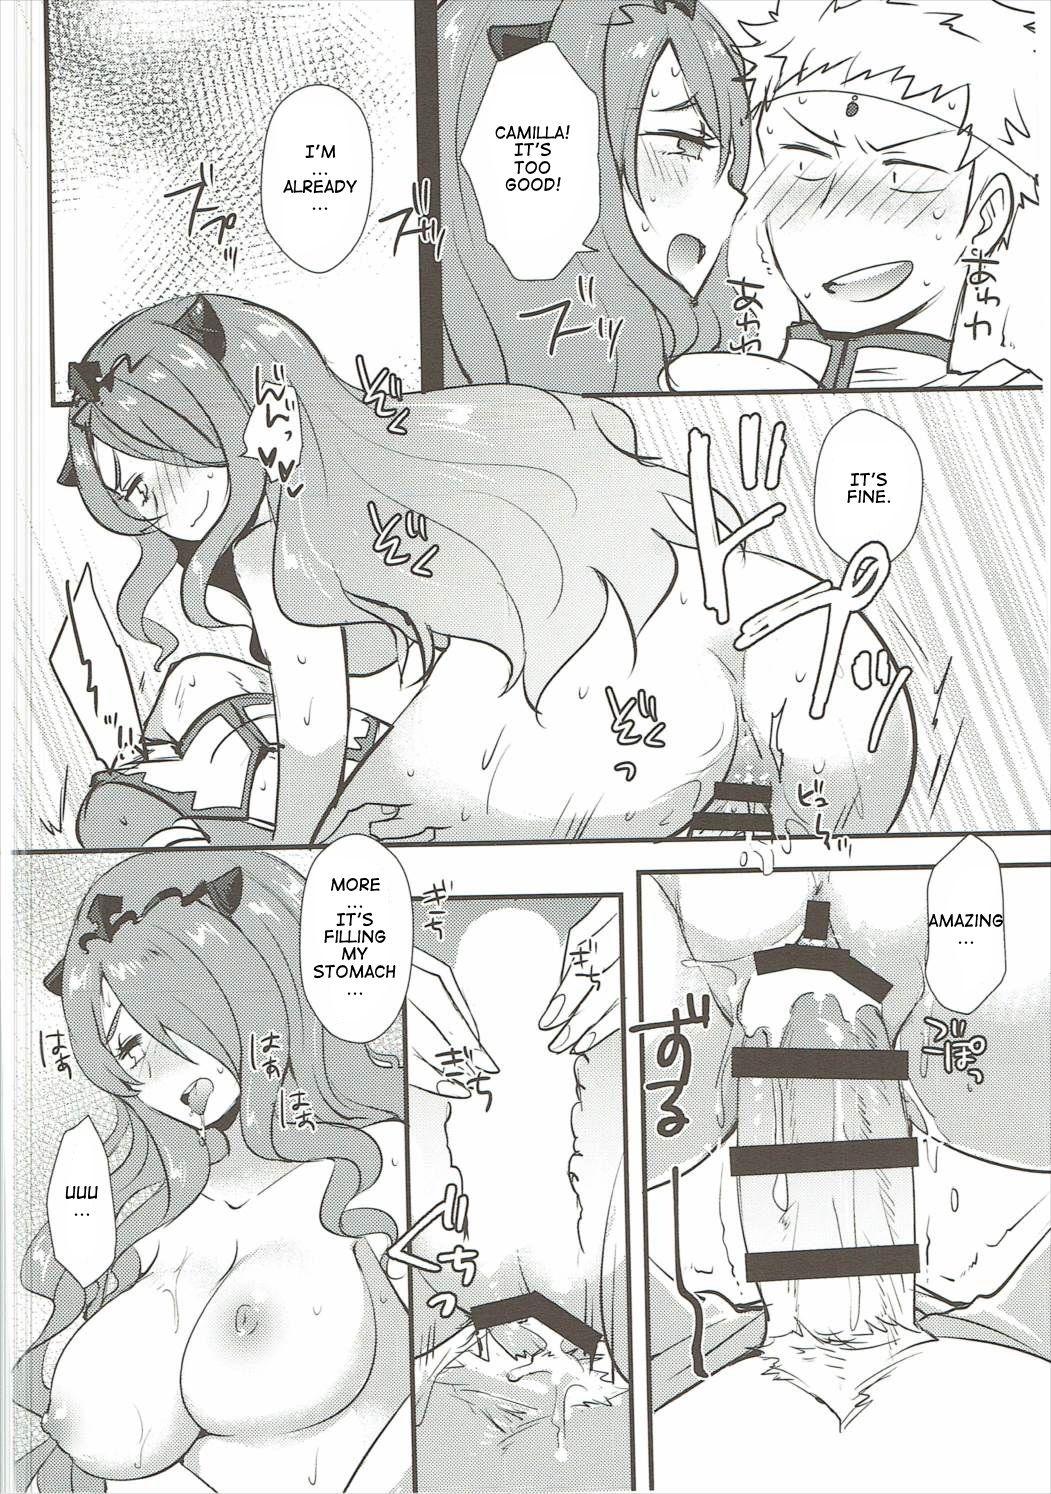 Mouth Shikkoku ni Michibikareshi Geppaku wa Koyoi Uruwashiku - Fire emblem if Chubby - Page 11